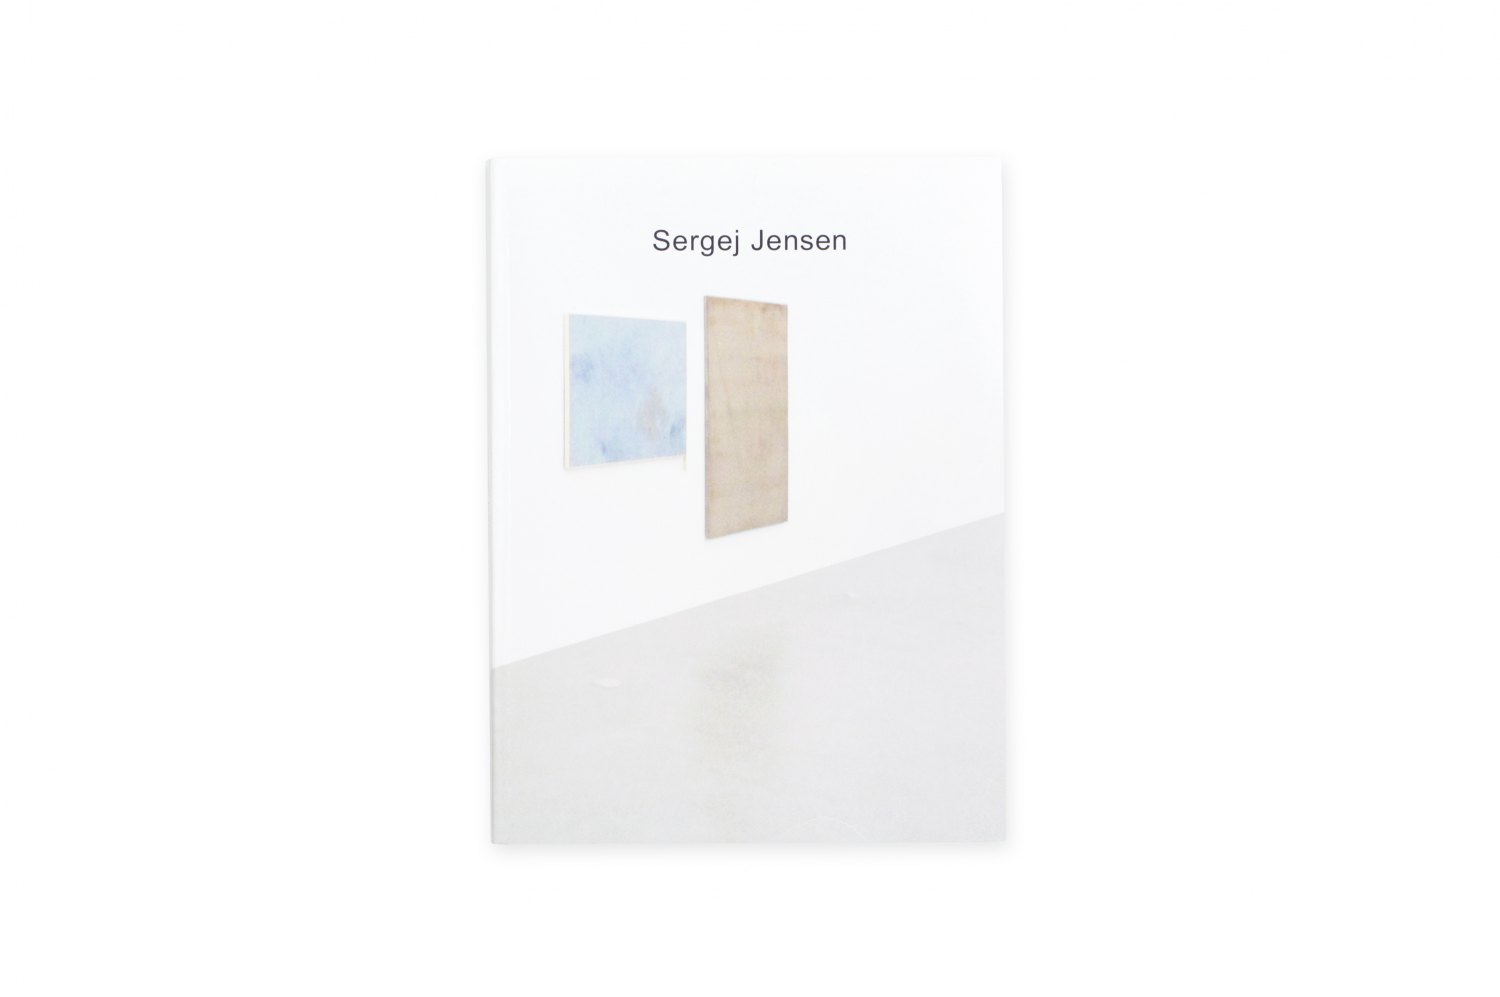 Sergej Jensen, Sergej Jensen ed. by Uta Grosenick, Berlin 2011, 300 p.  ISBN 978-3-94240-506-5